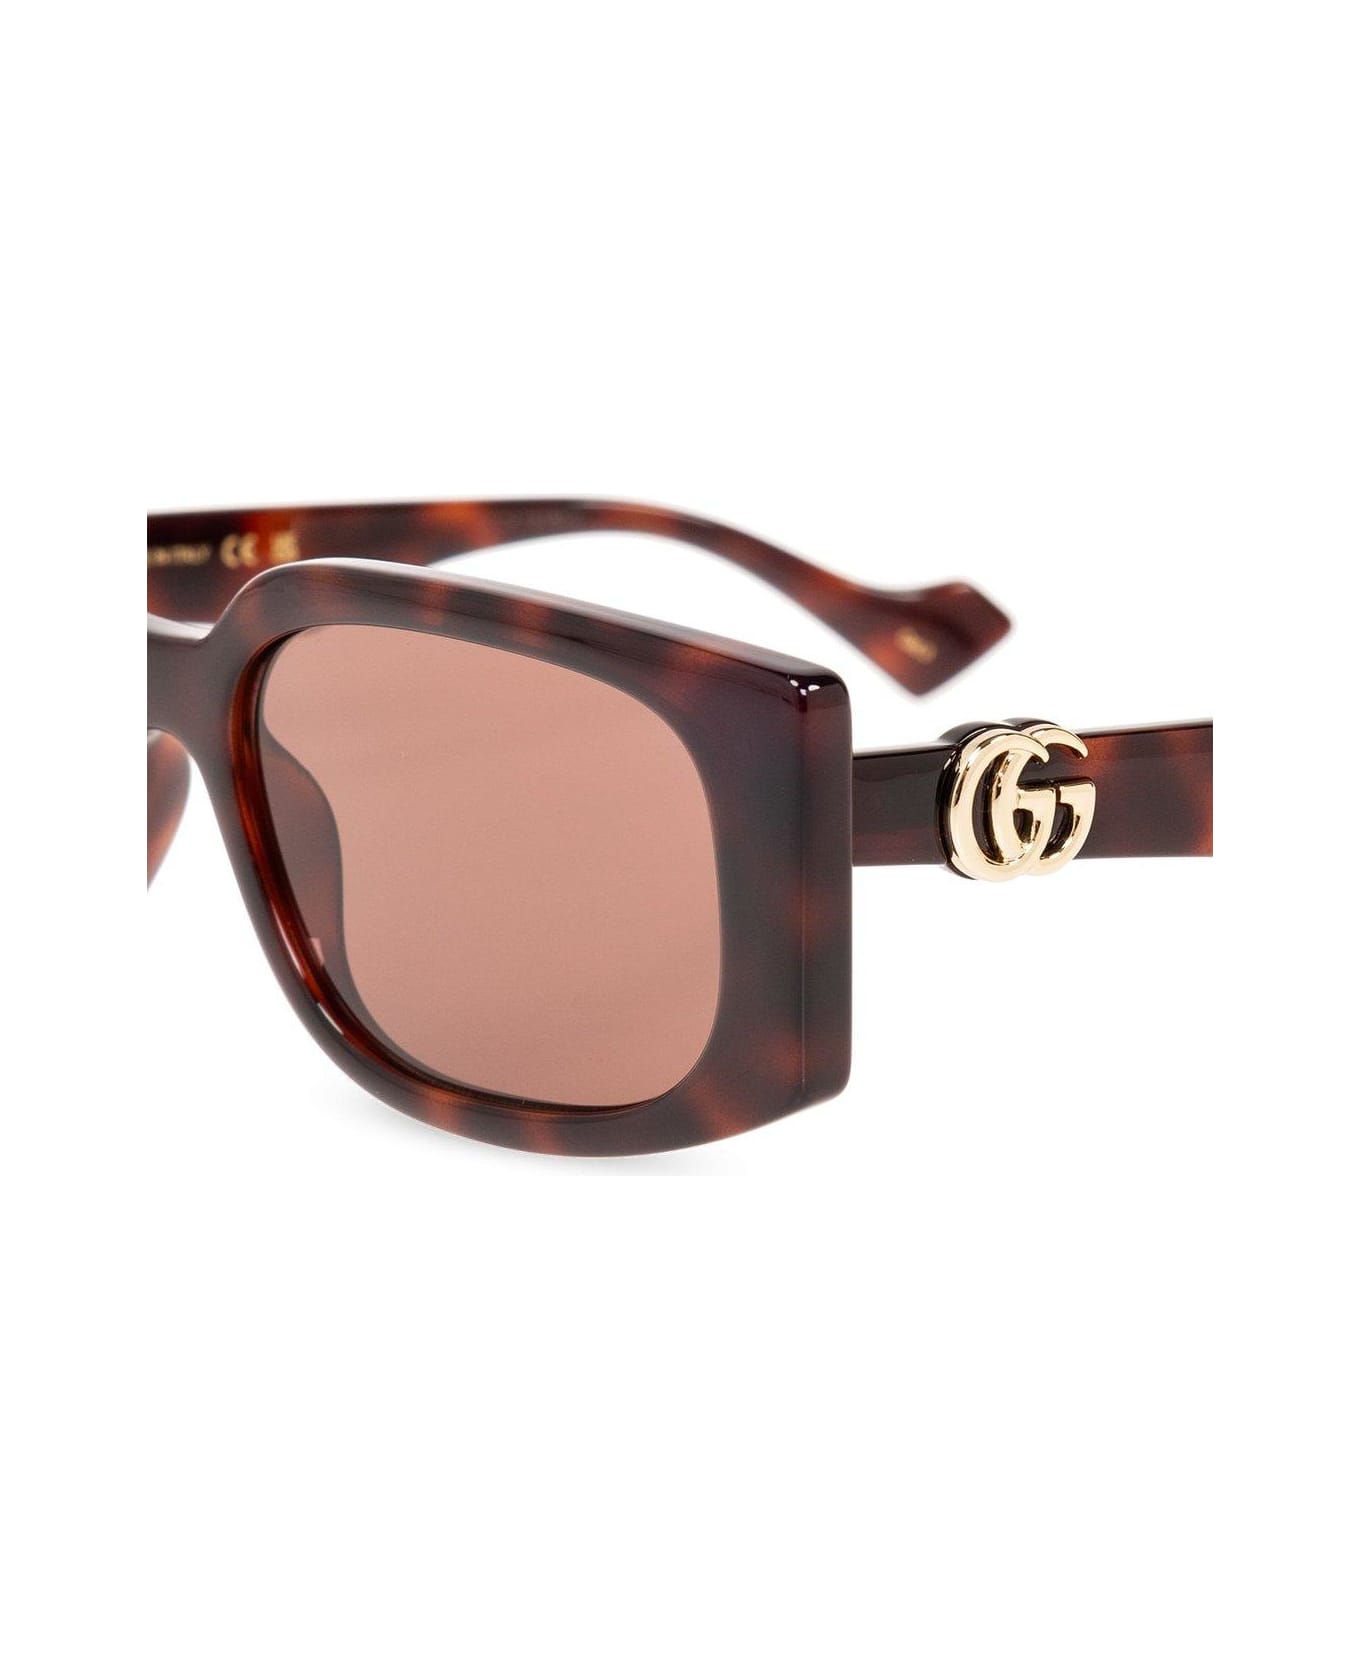 Gucci Eyewear Rectangle Frame Sunglasses - Havana Brown